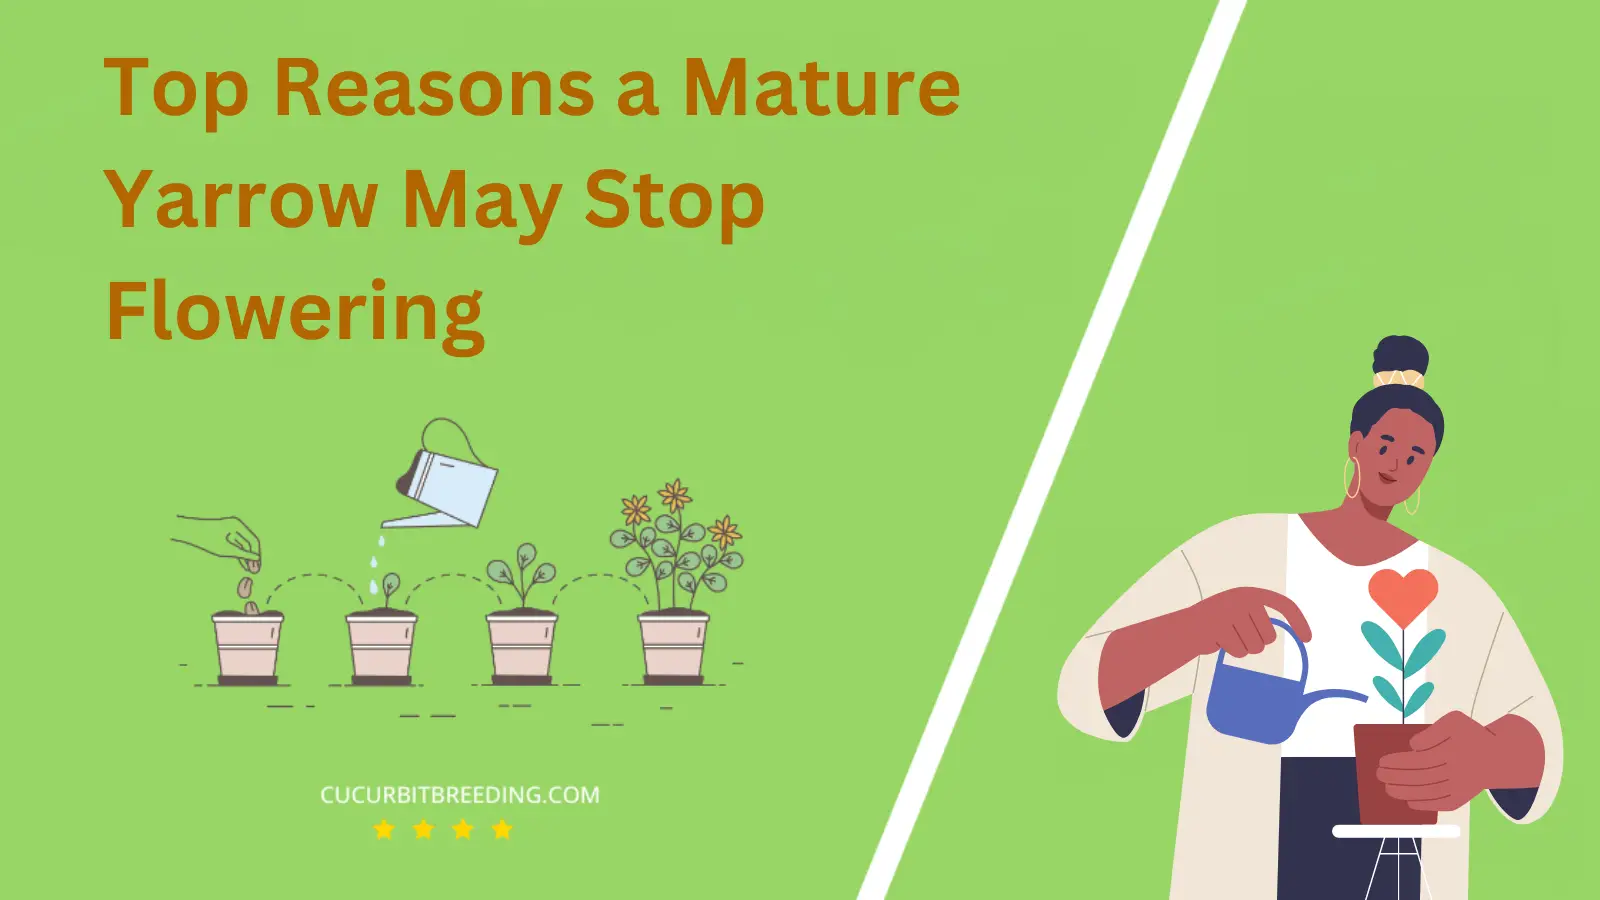 Top Reasons a Mature Yarrow May Stop Flowering